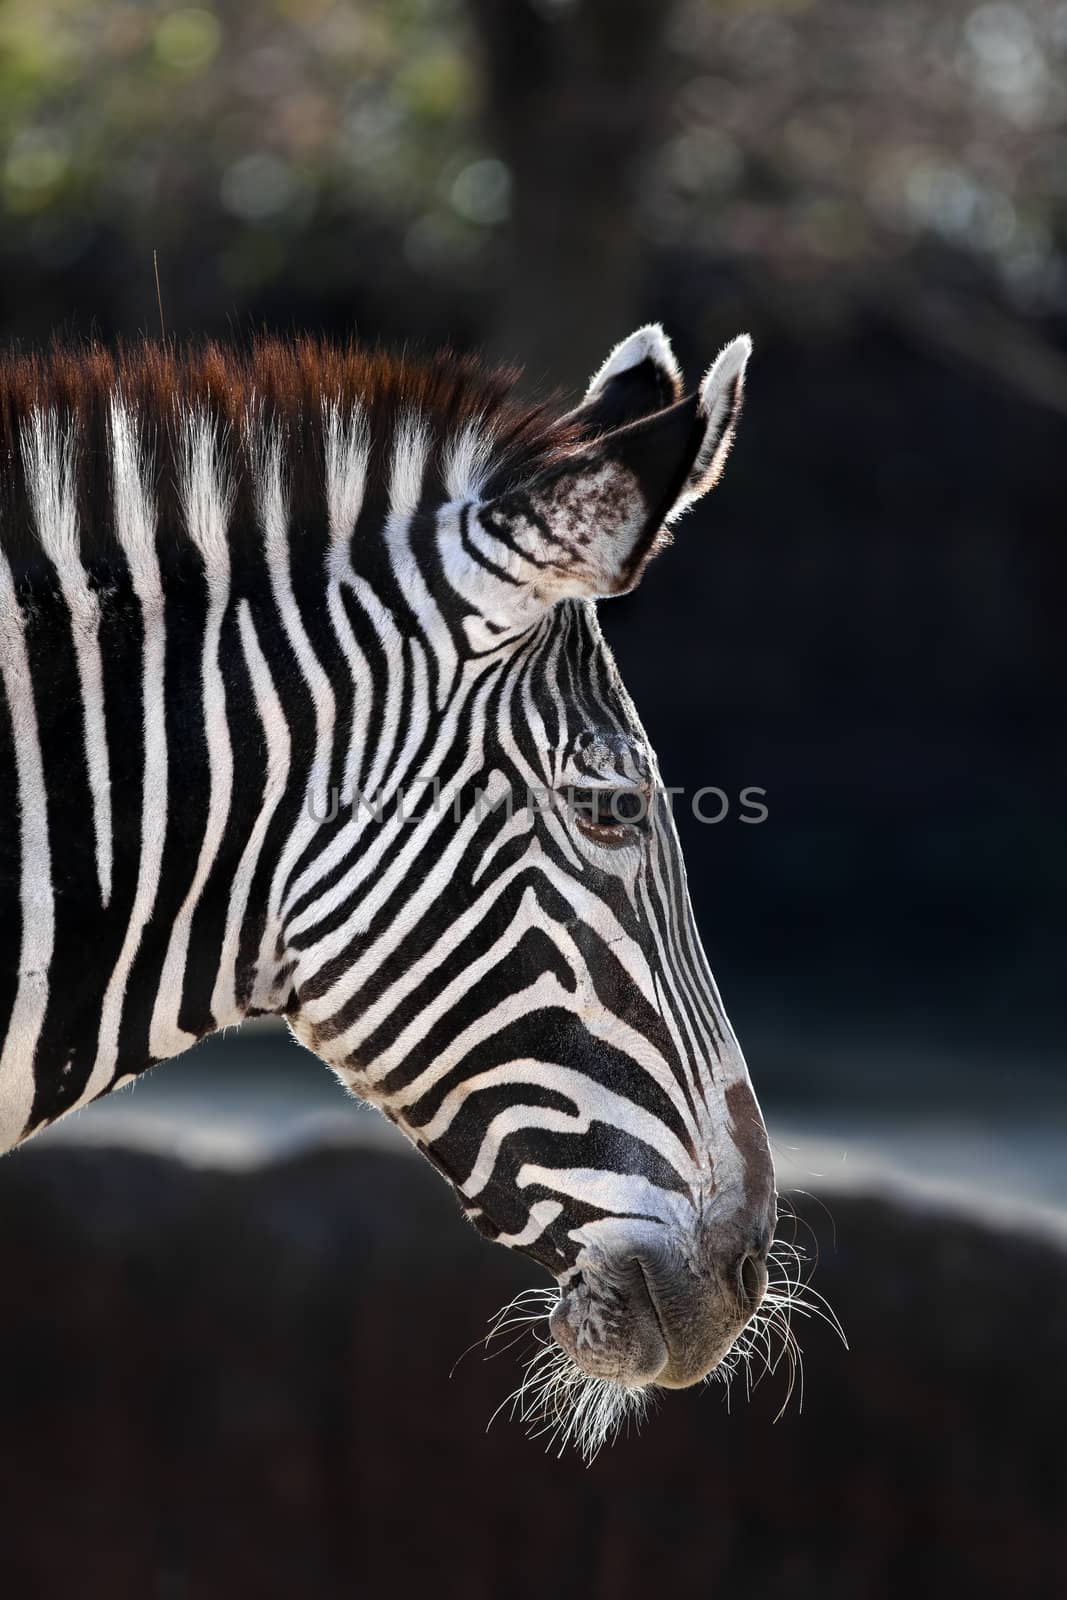 Zebra by macropixel